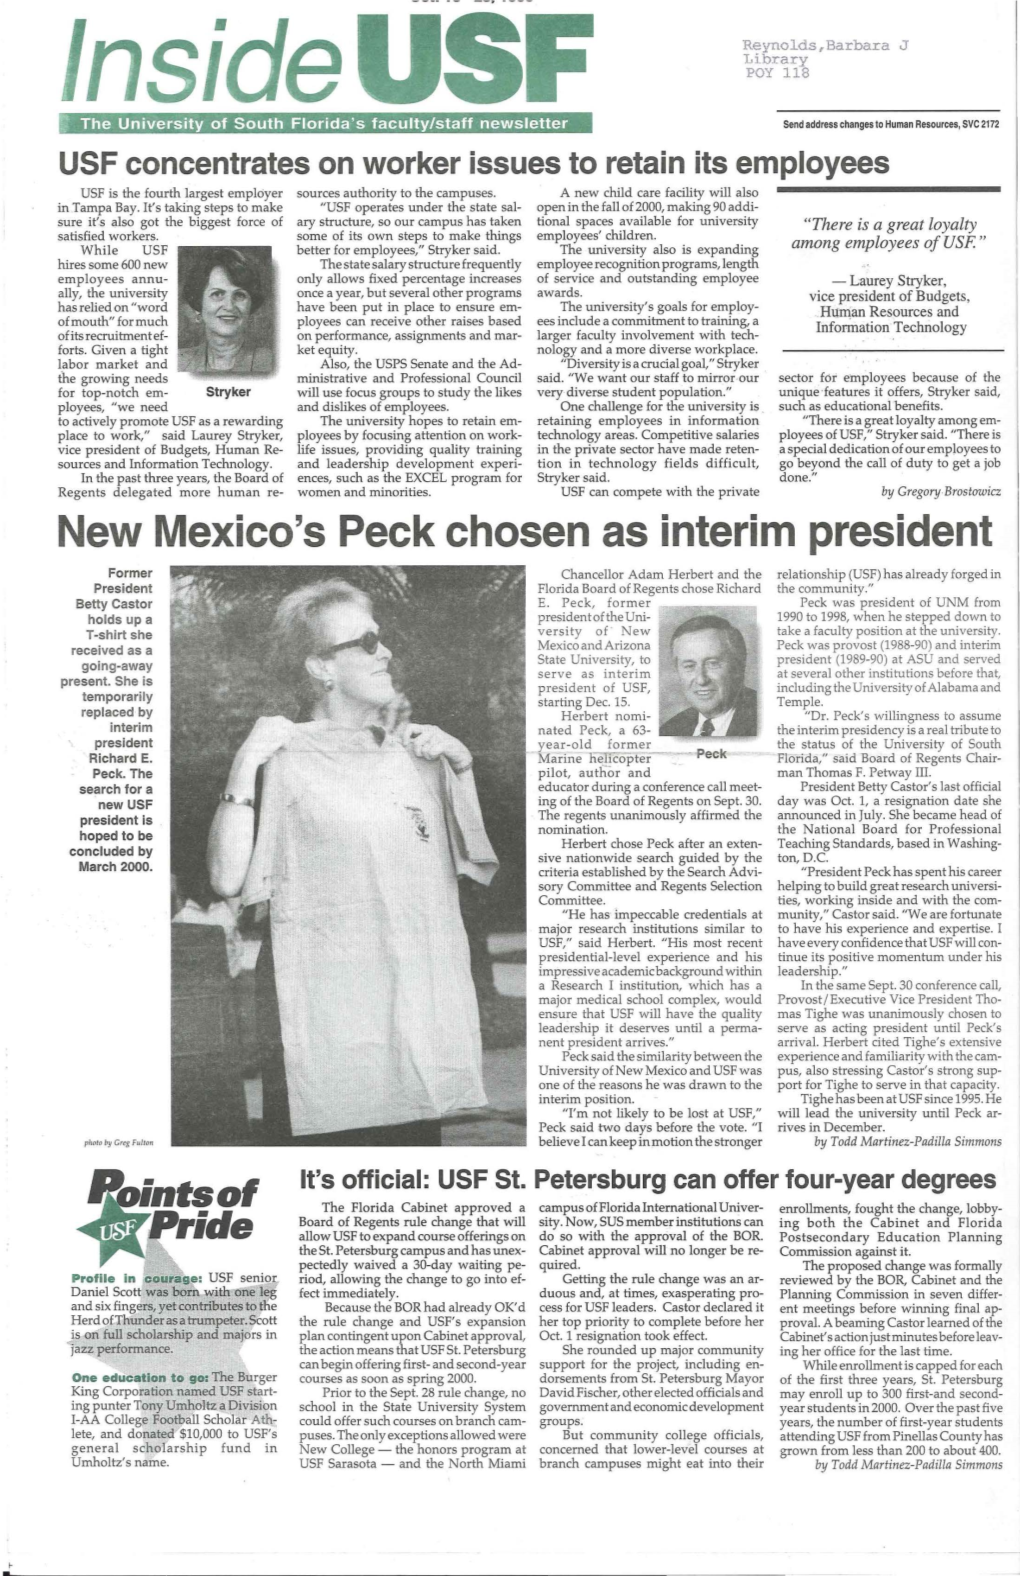 New Mexico's Peck Chosen As Interim President